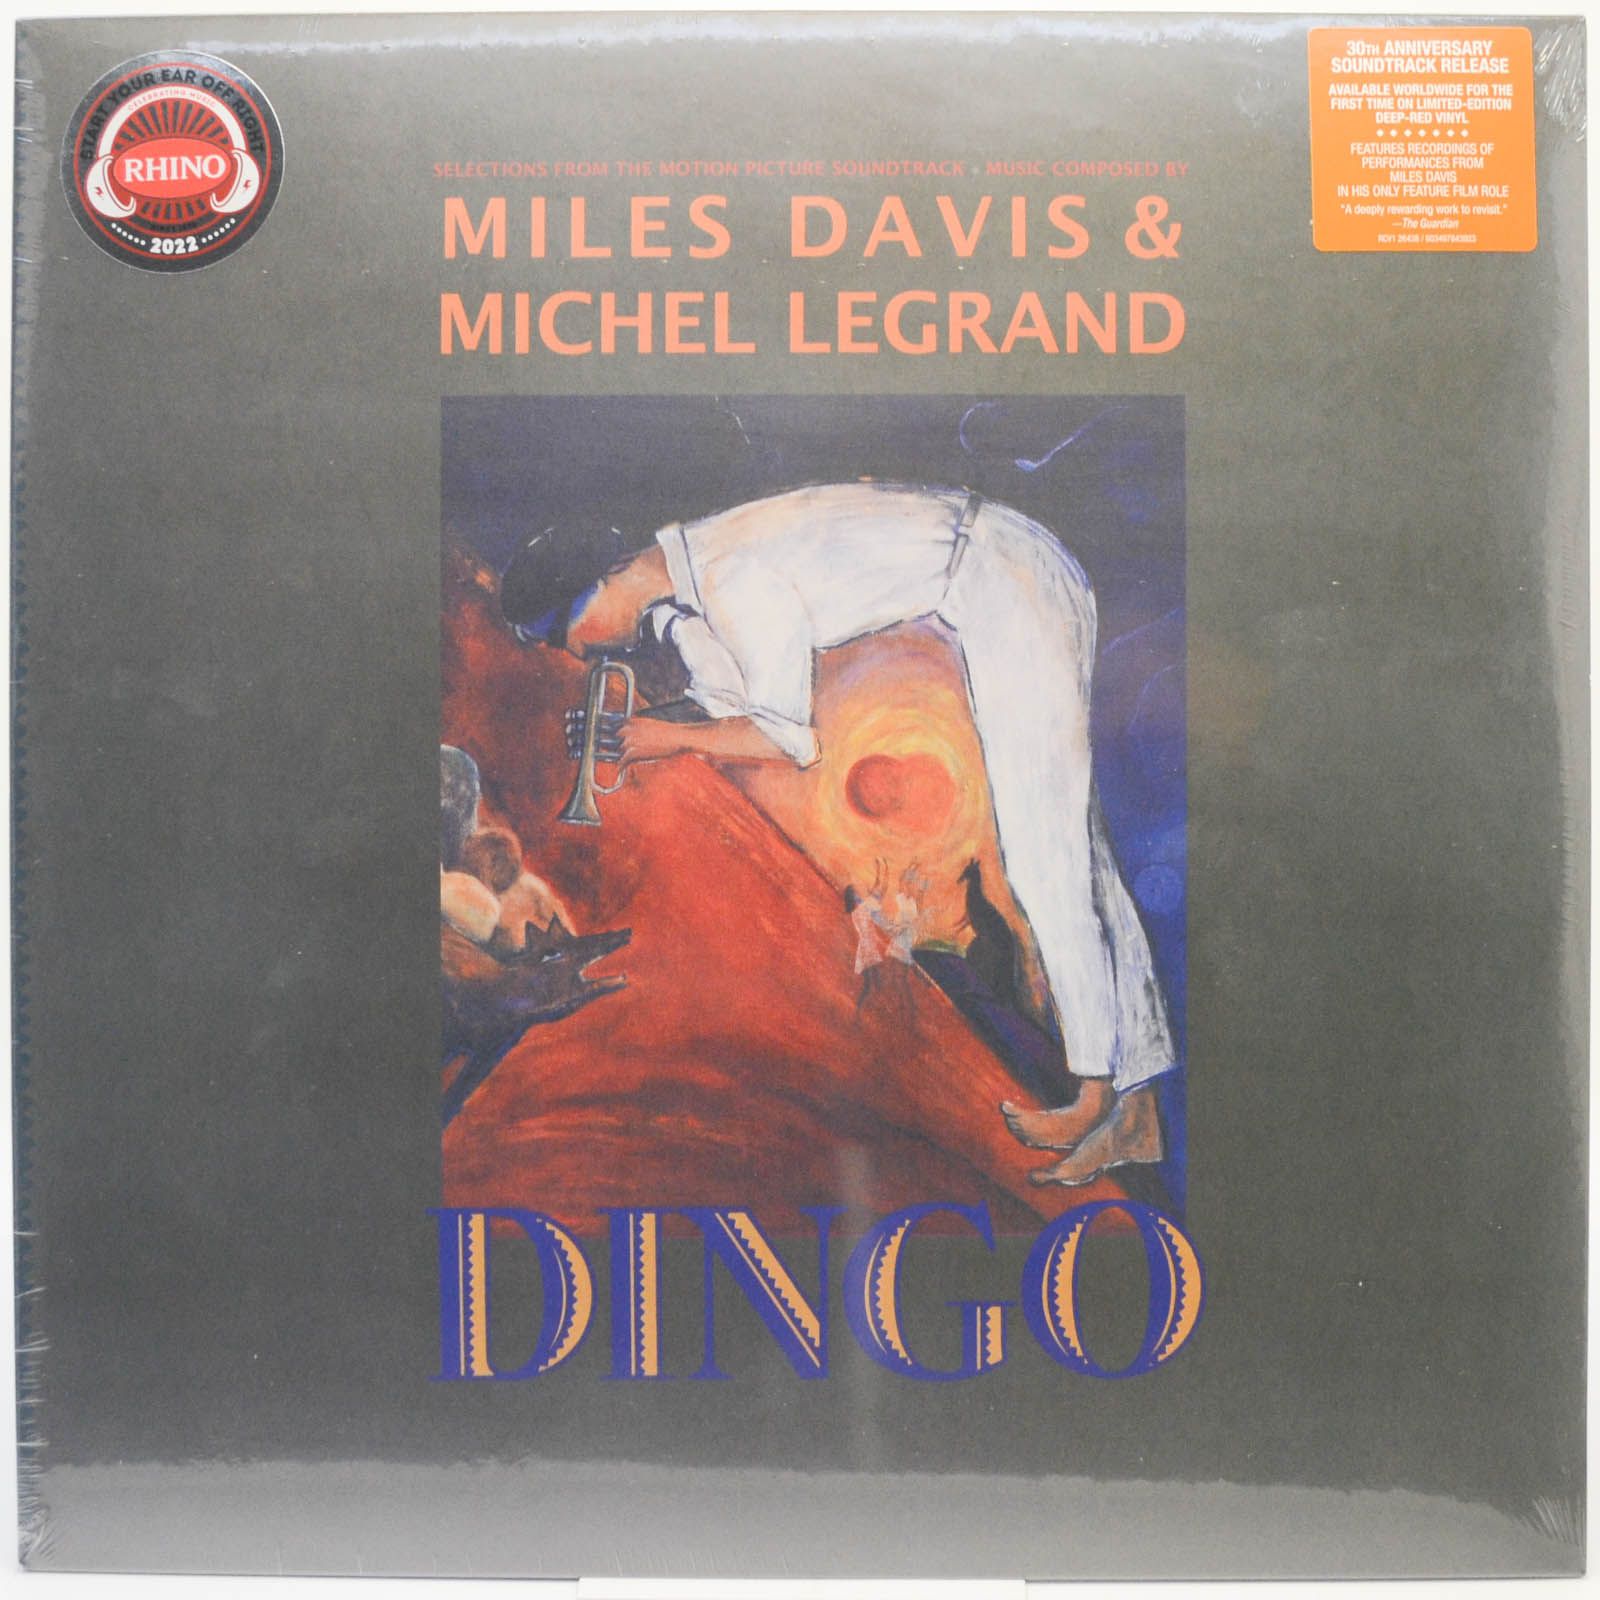 Miles Davis & Michel Legrand — Dingo, 1991